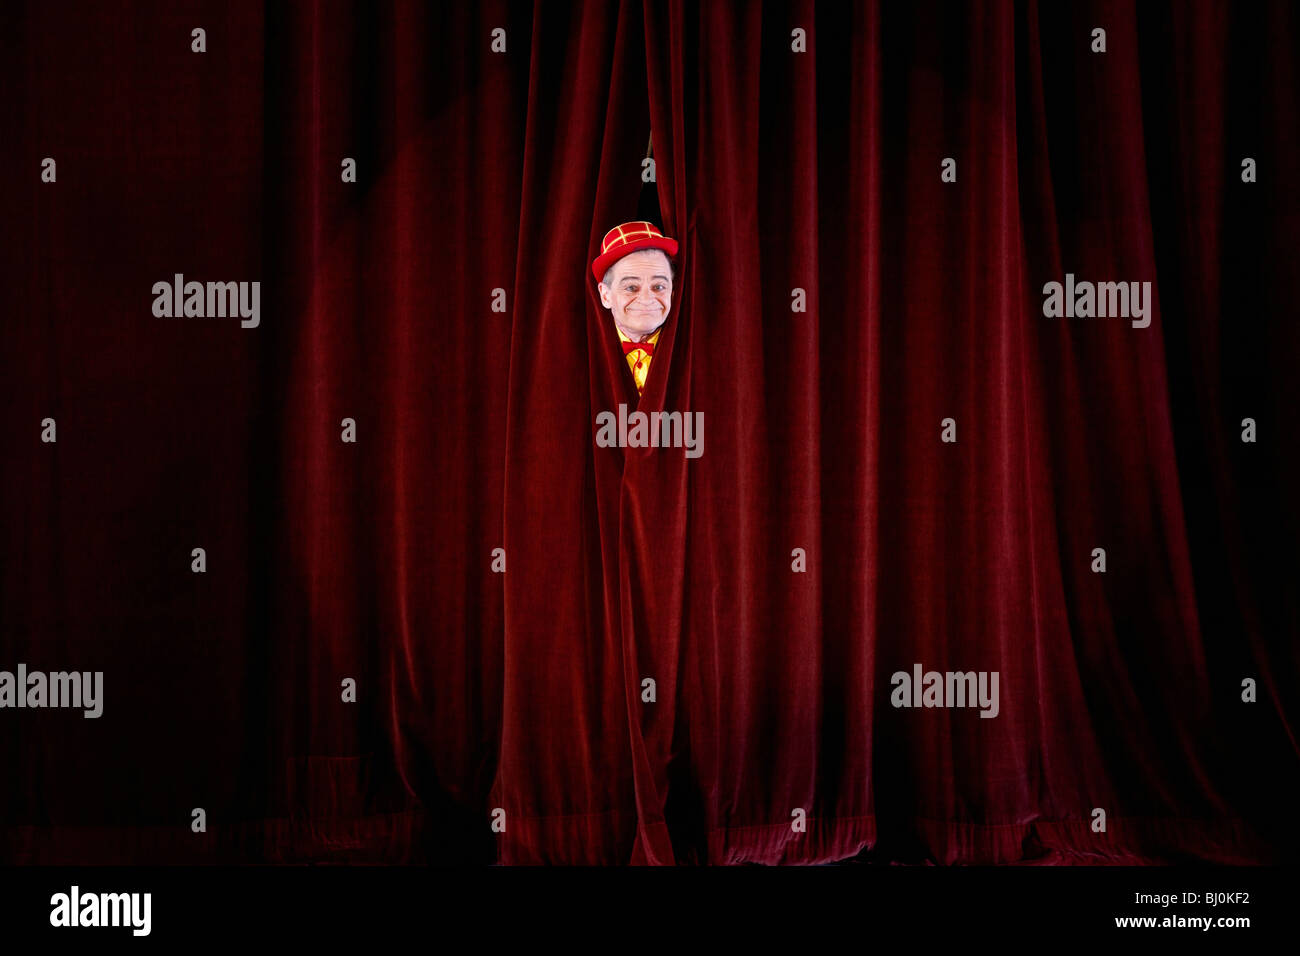 clown on stage peeking through curtain Stock Photo